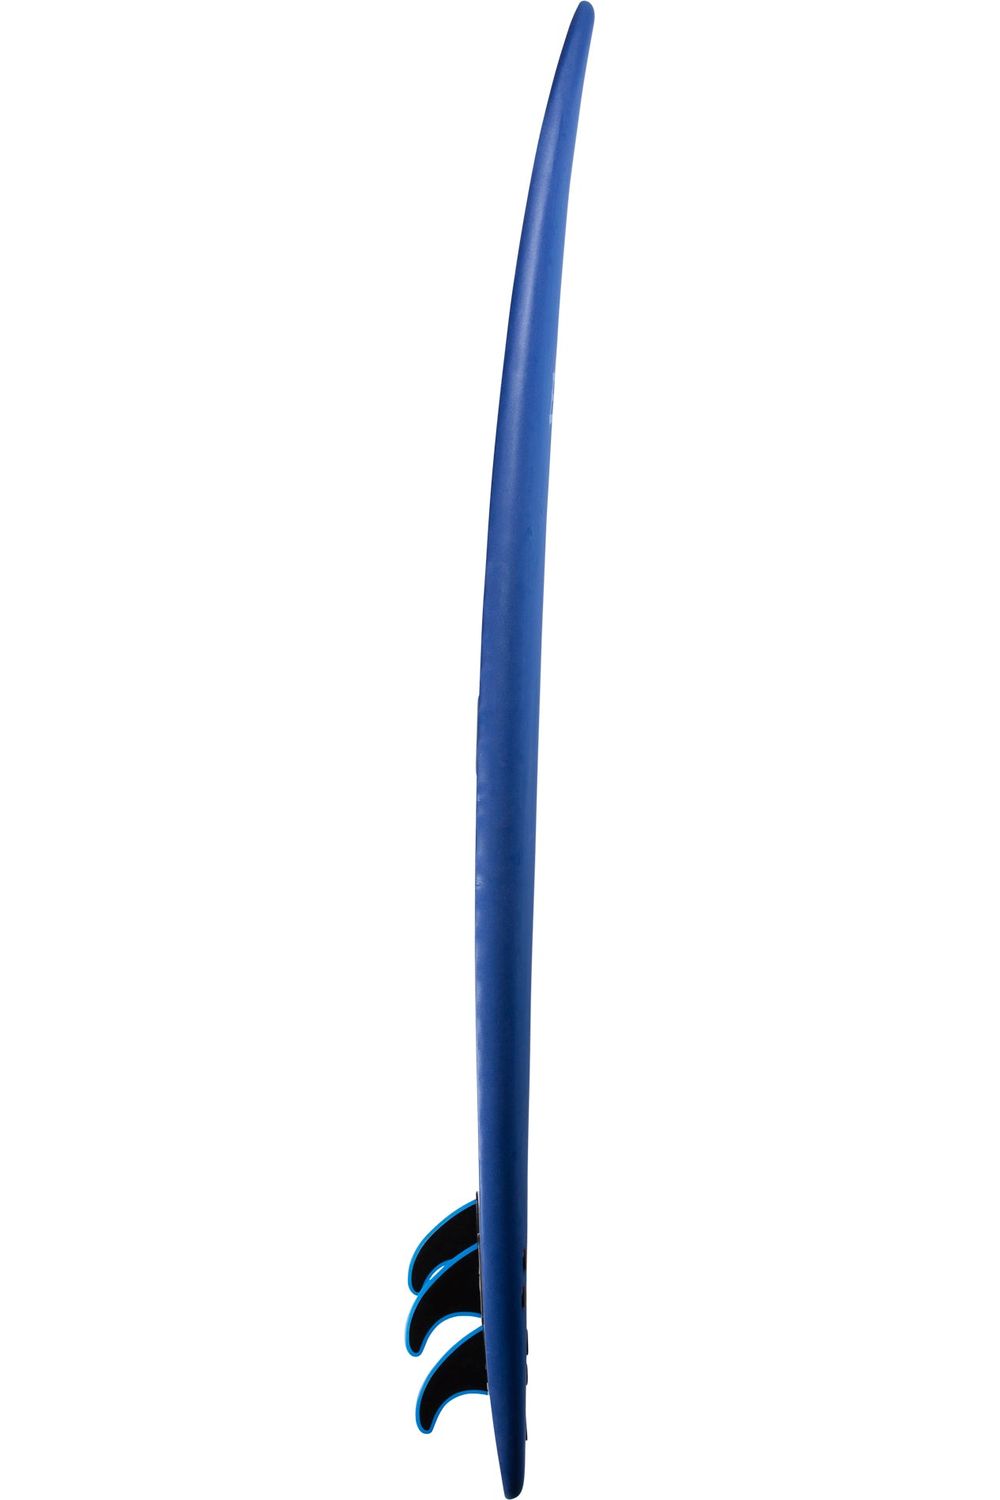 Tiki Epic 7'6 Softboard Blue